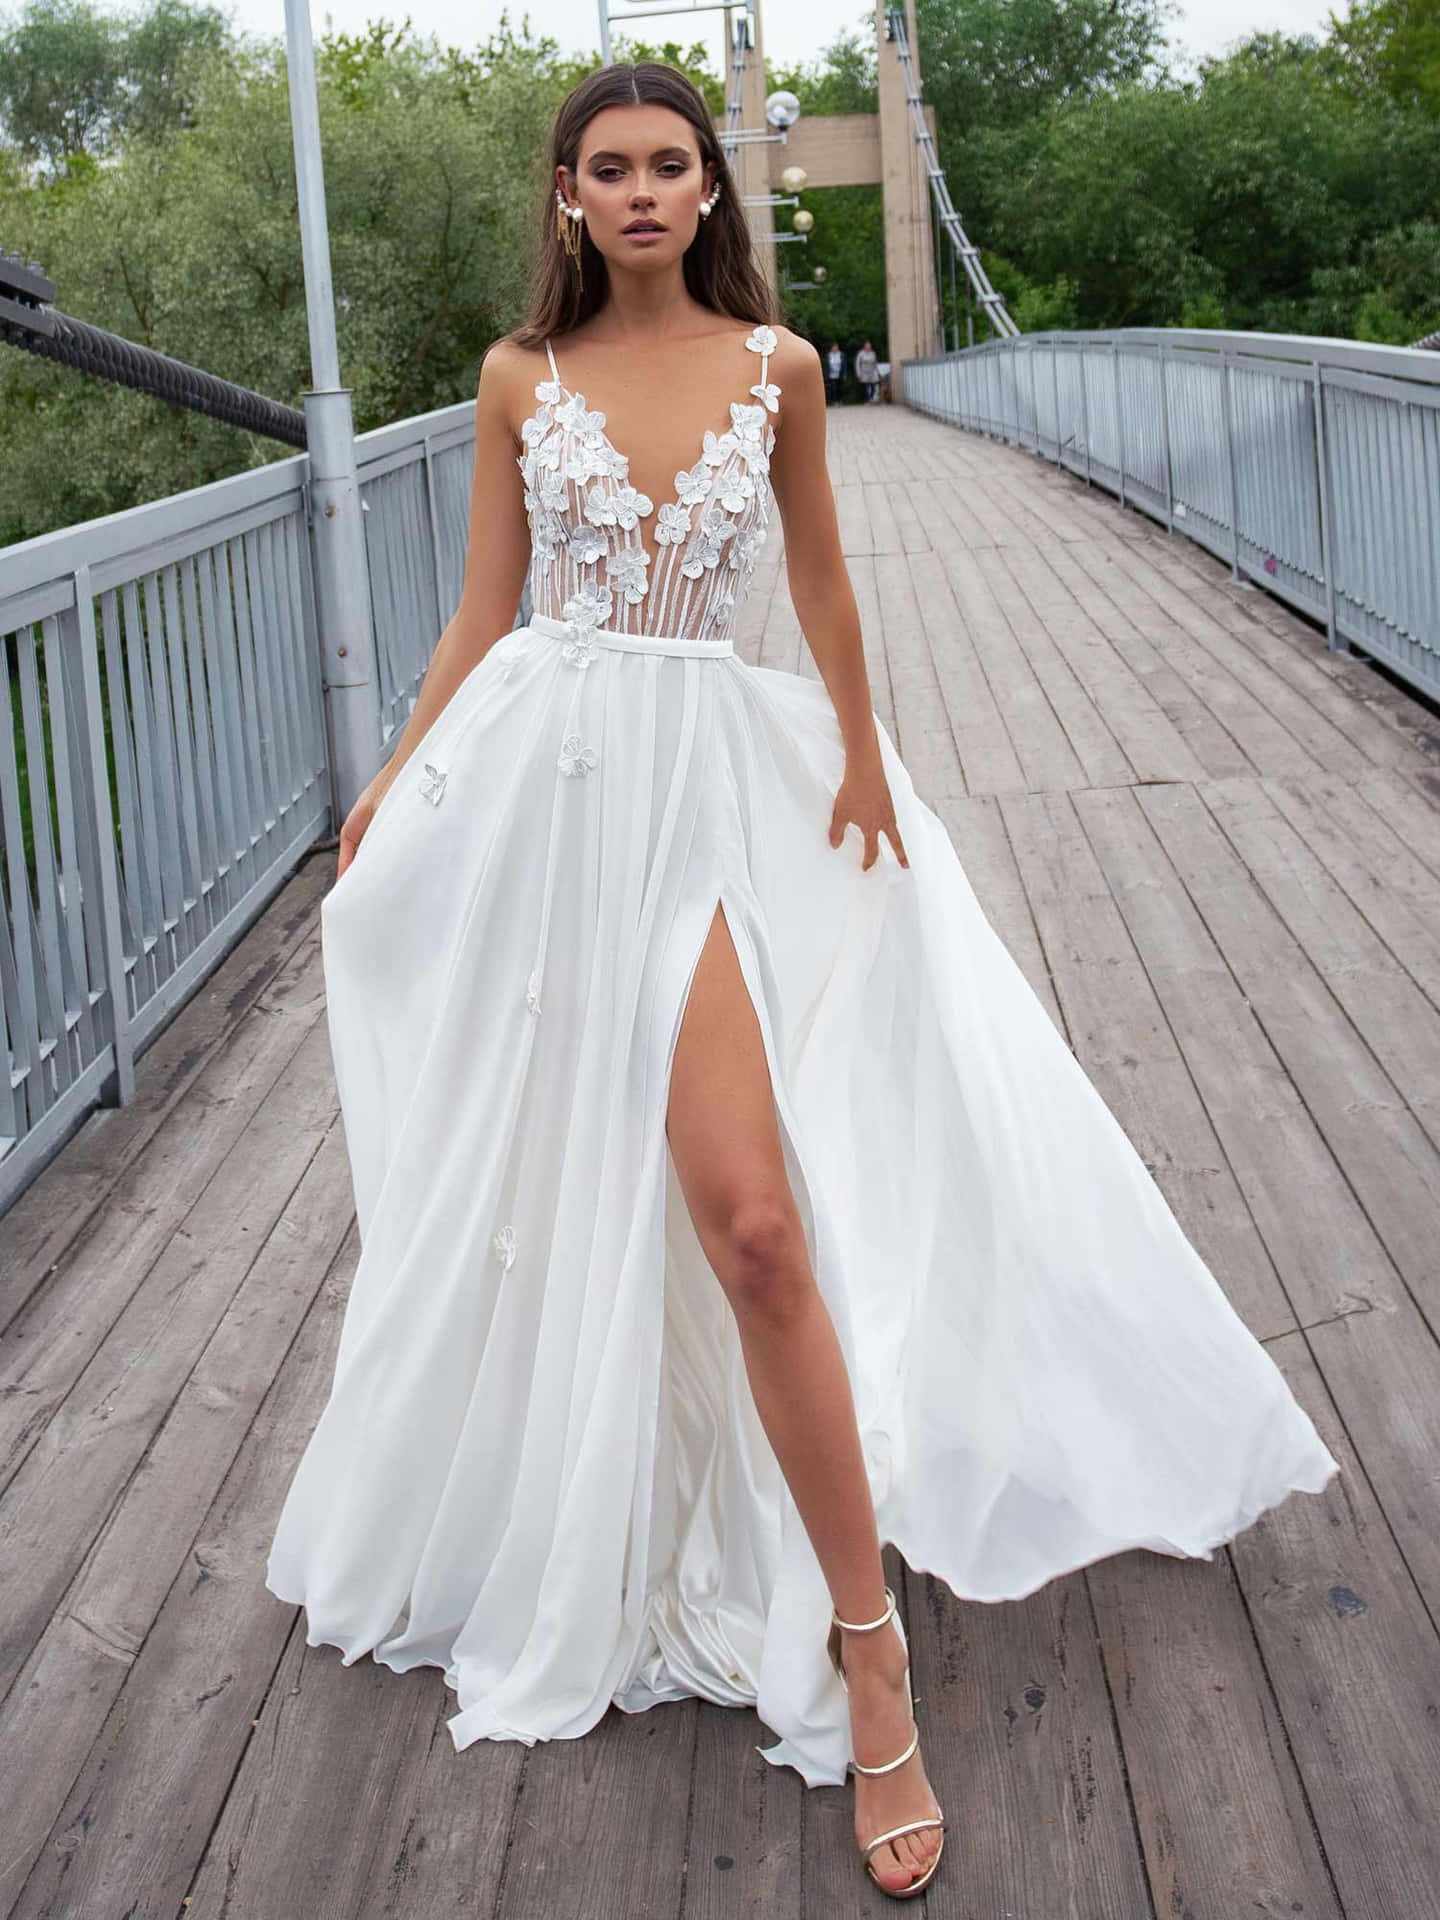 Elegant Bride Wearing a Beautiful Wedding Gown